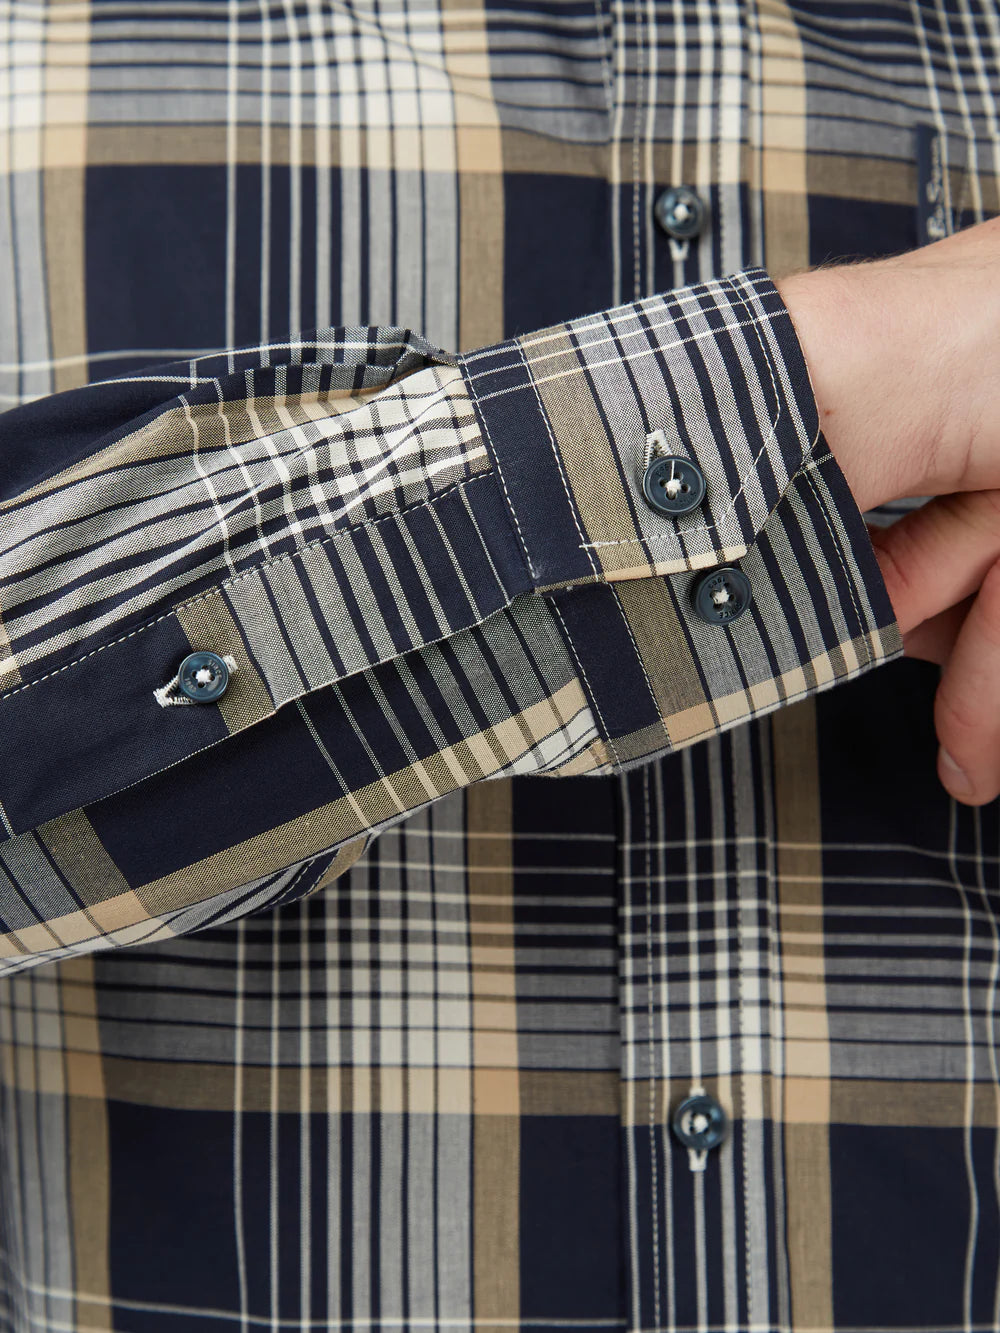 Ben Sherman Linear Check Shirt Long-Sleeve